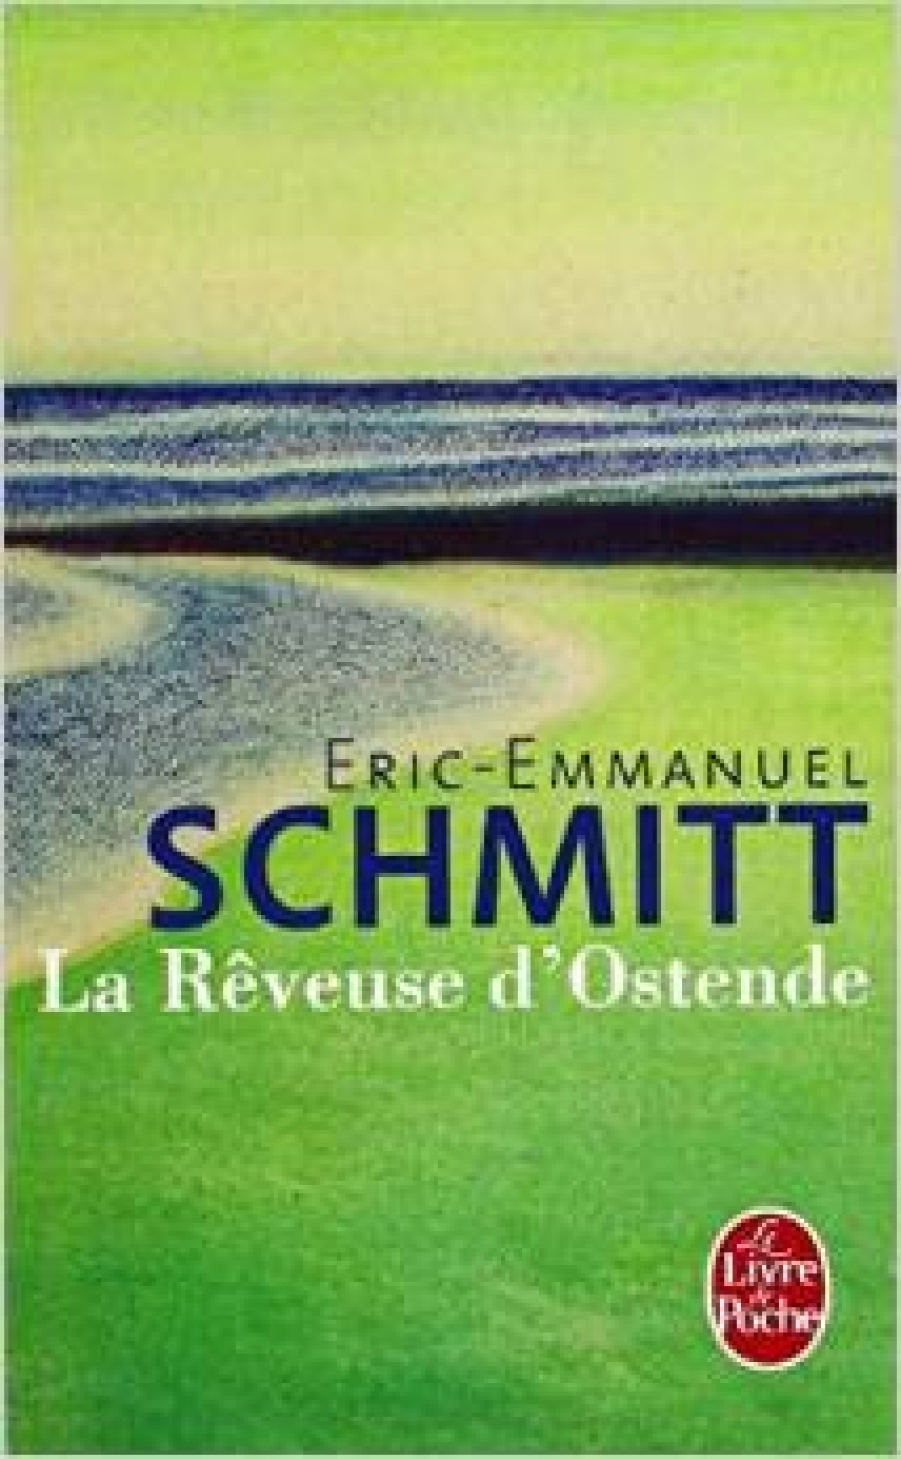 Eric-Emmanuel Schmitt La Rêveuse d'Ostende 